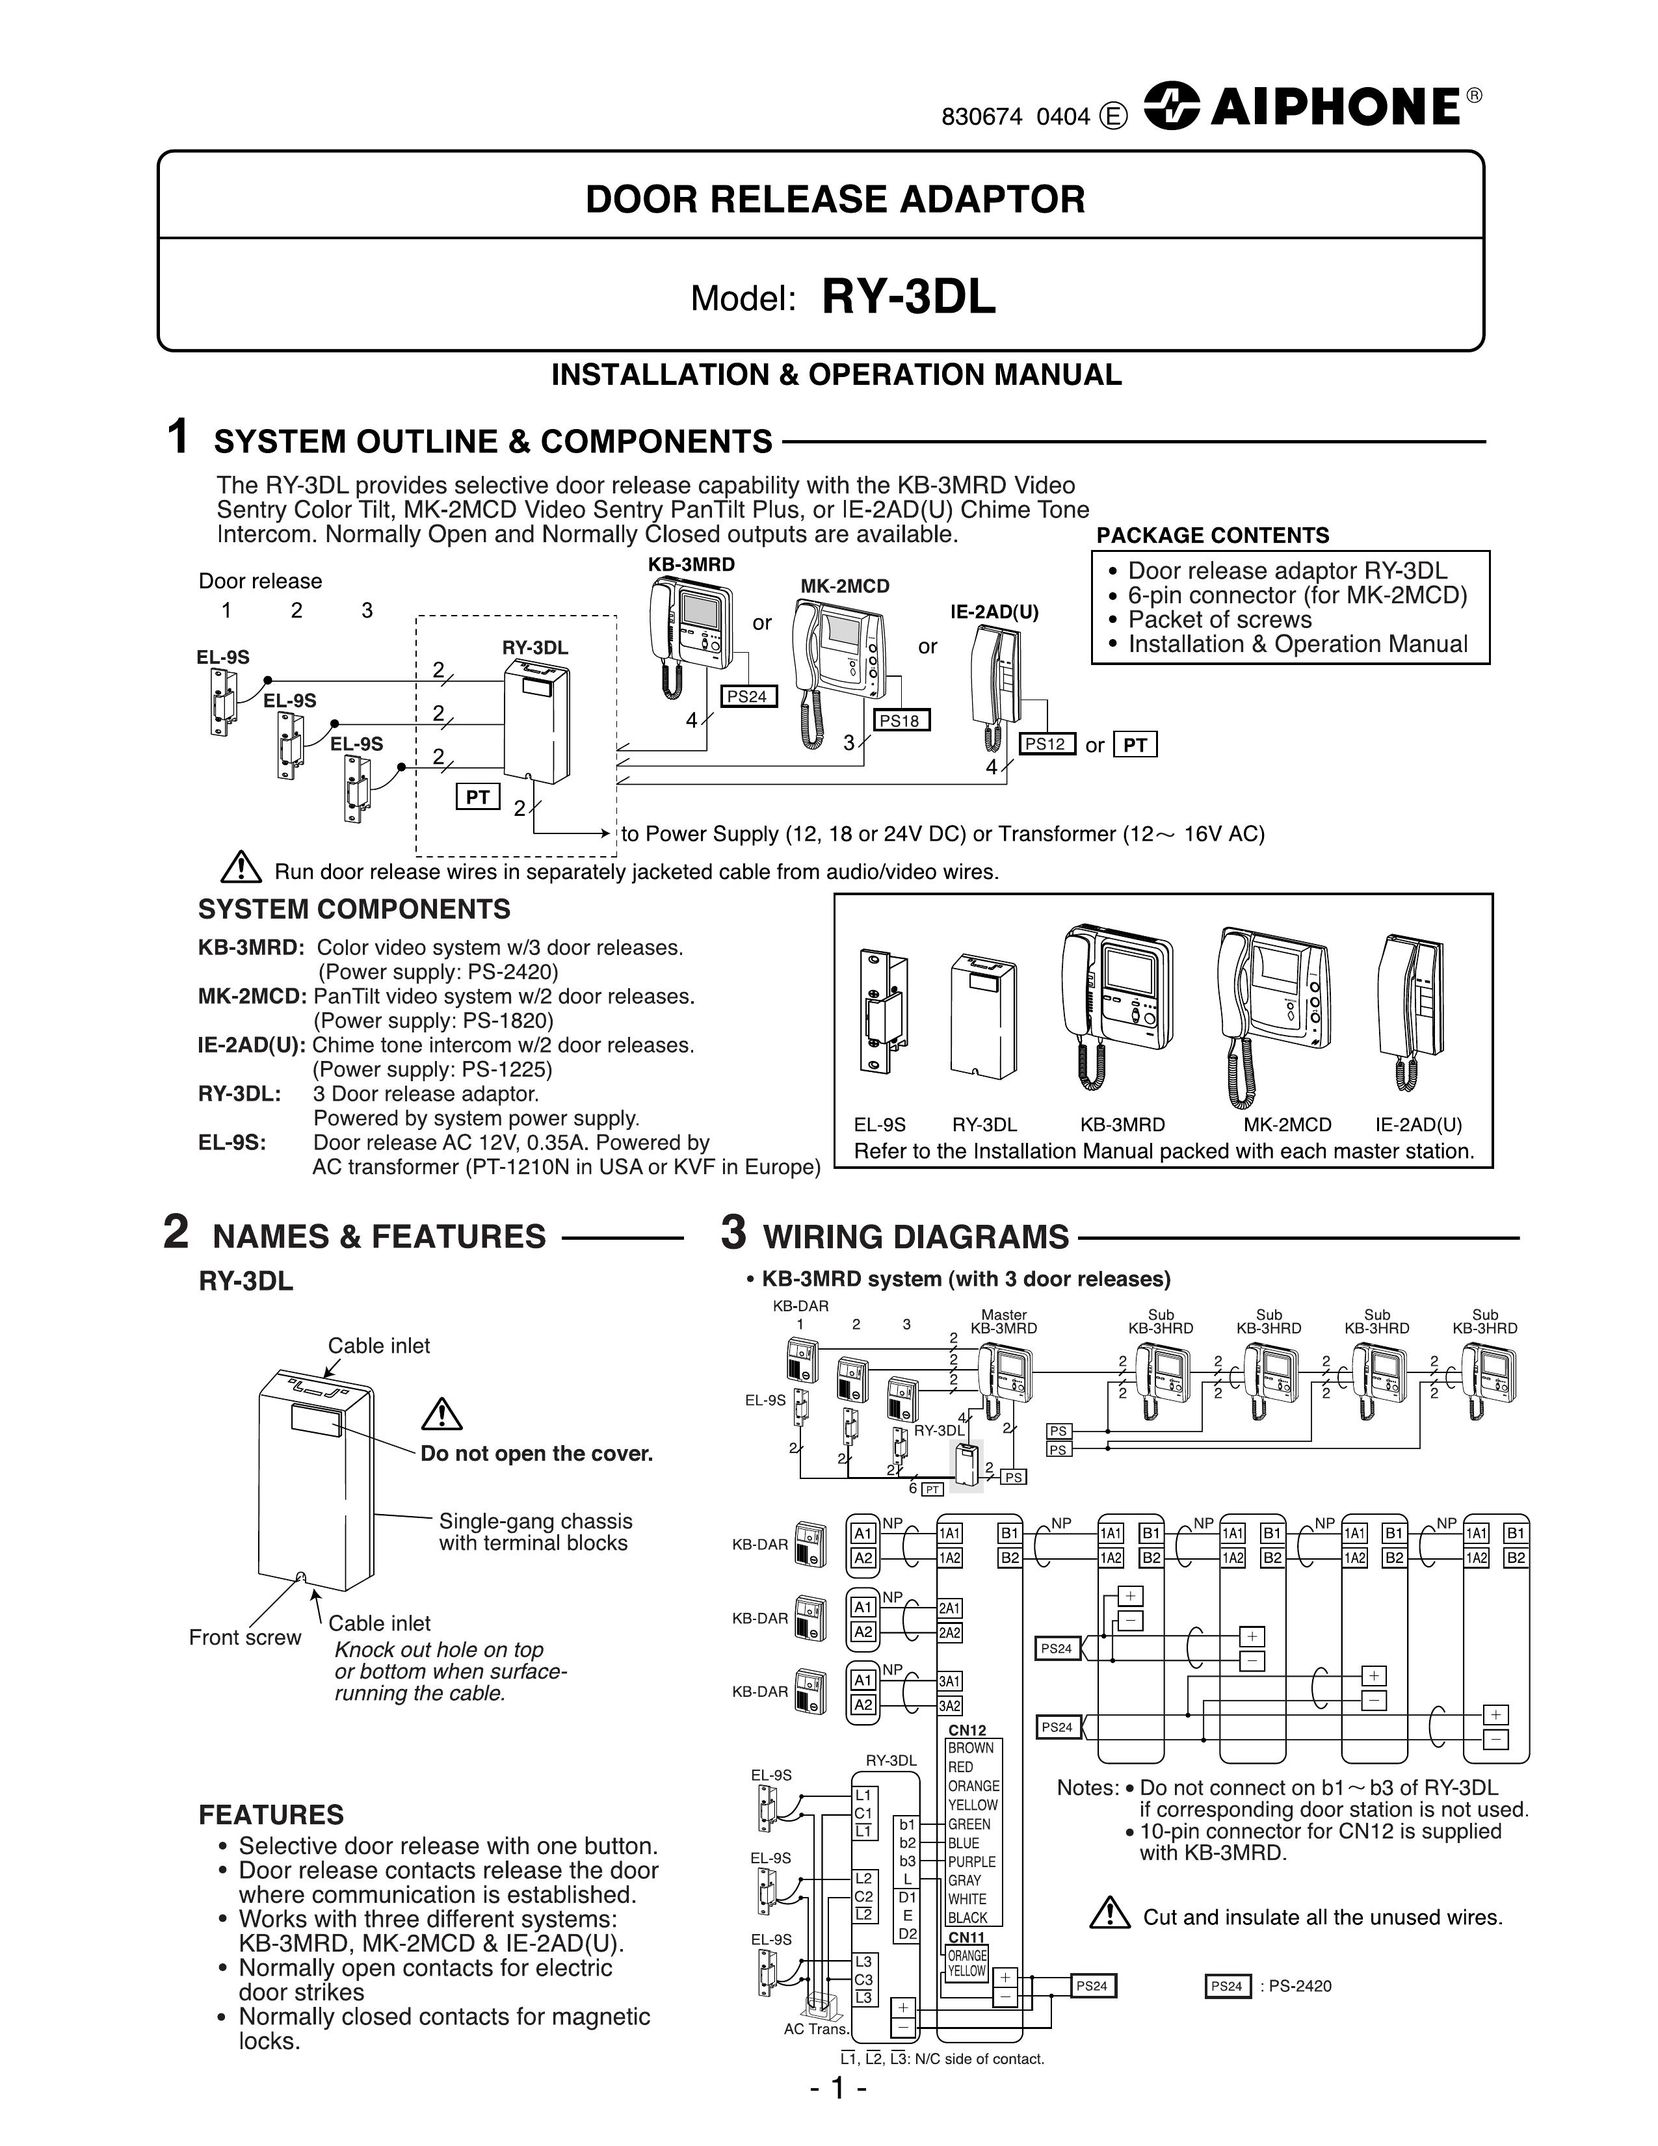 Aiphone RY-3DL Door User Manual